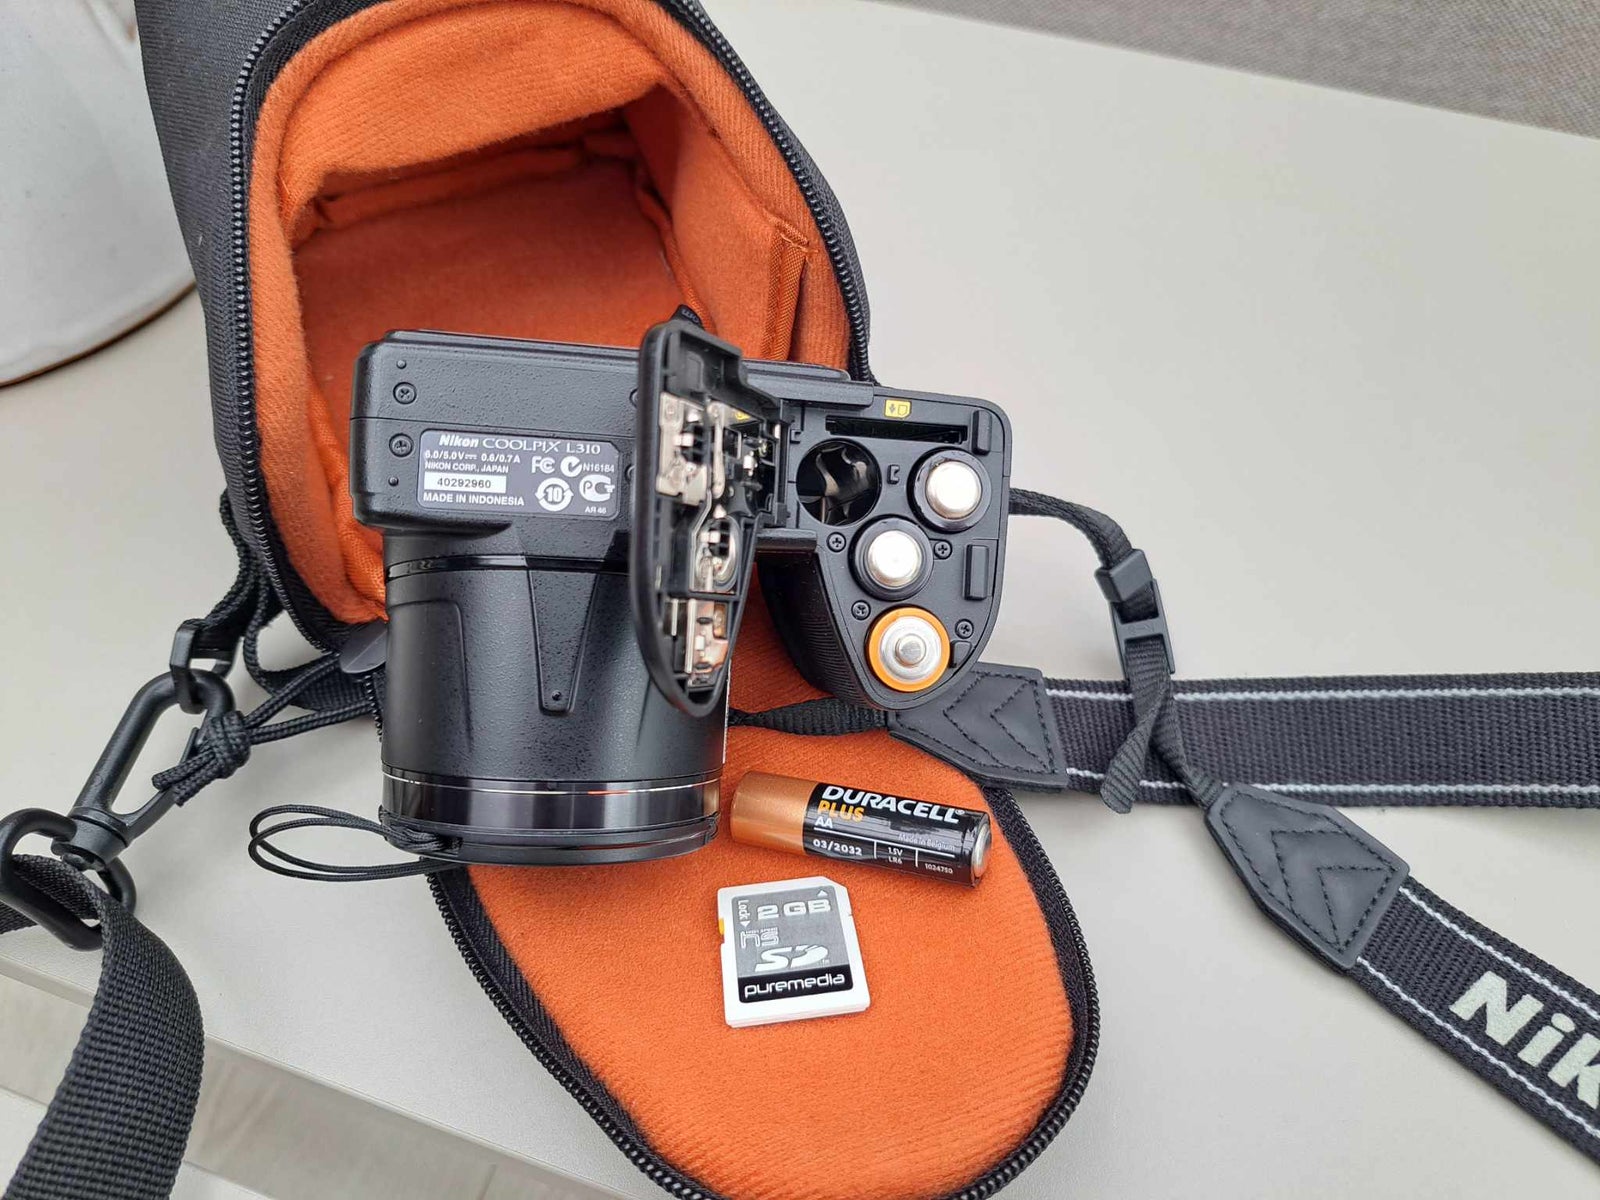 Nikon Coolpix L310, 14,1 megapixels, 21 x optisk zoom